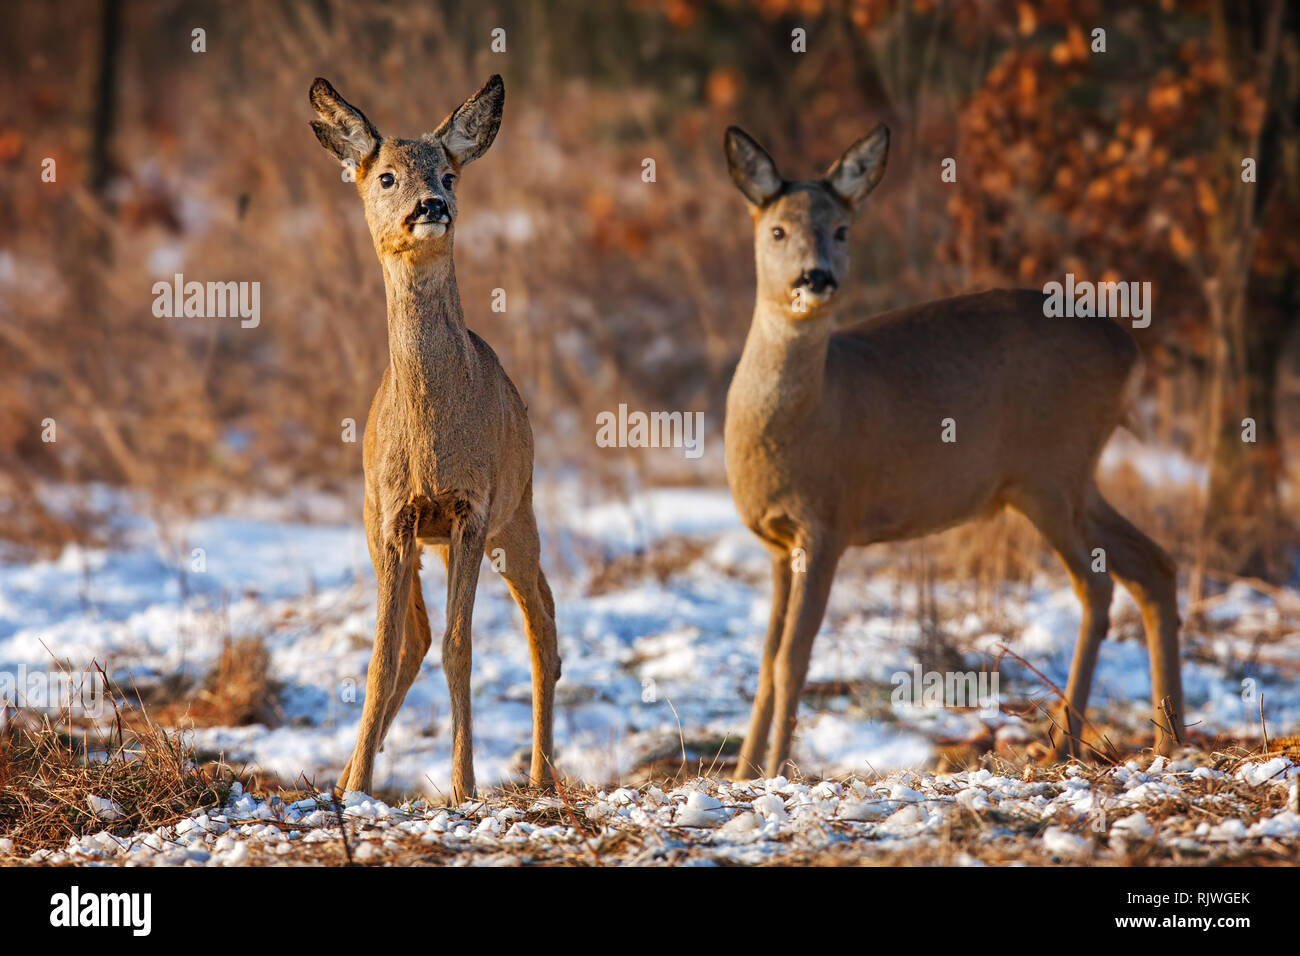 Two roe deer, capreolus capreolus, in winter time. Stock Photo